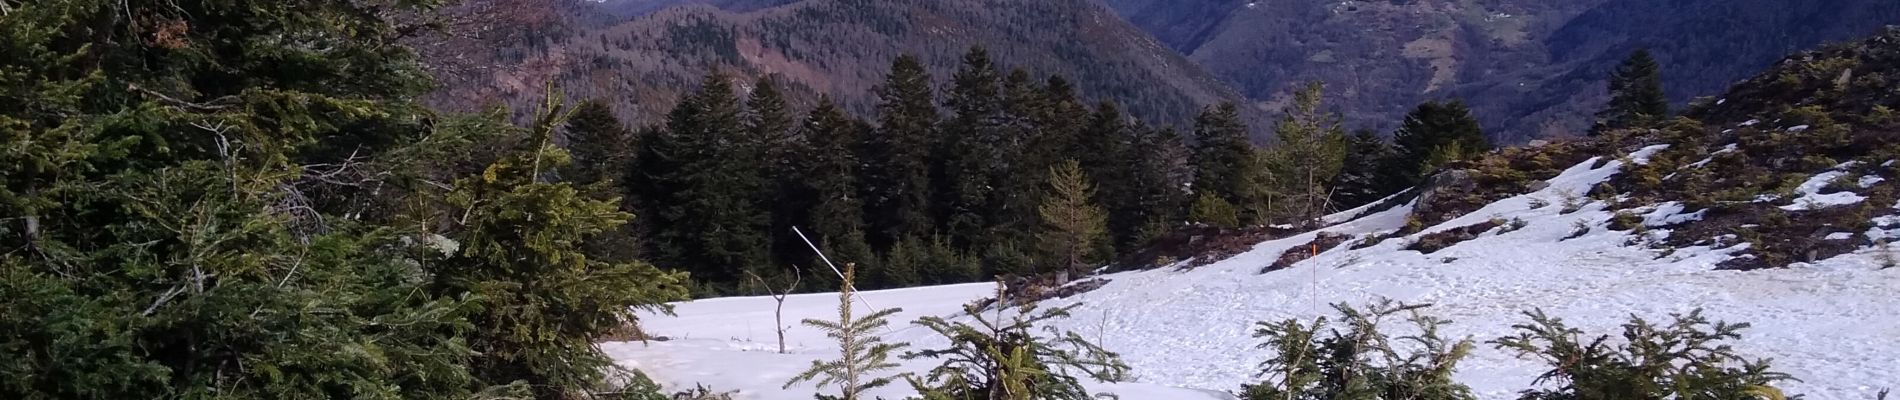 Tour Schneeschuhwandern Boutx - 2021-02-16  raquettes le mourtis - Photo